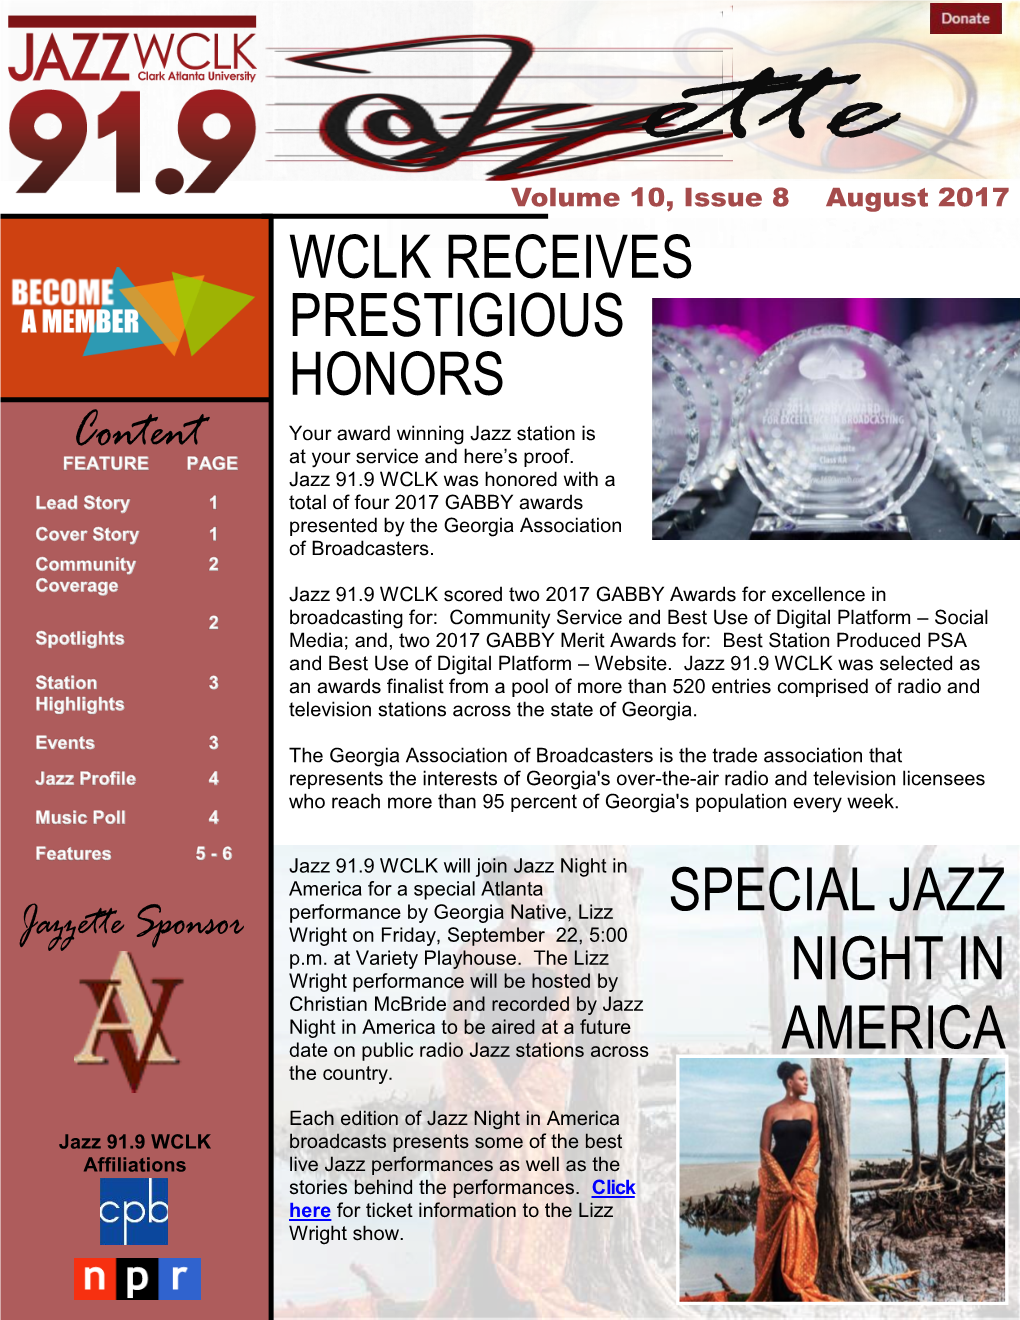 Wclk Receives Prestigious Honors Special Jazz Night In